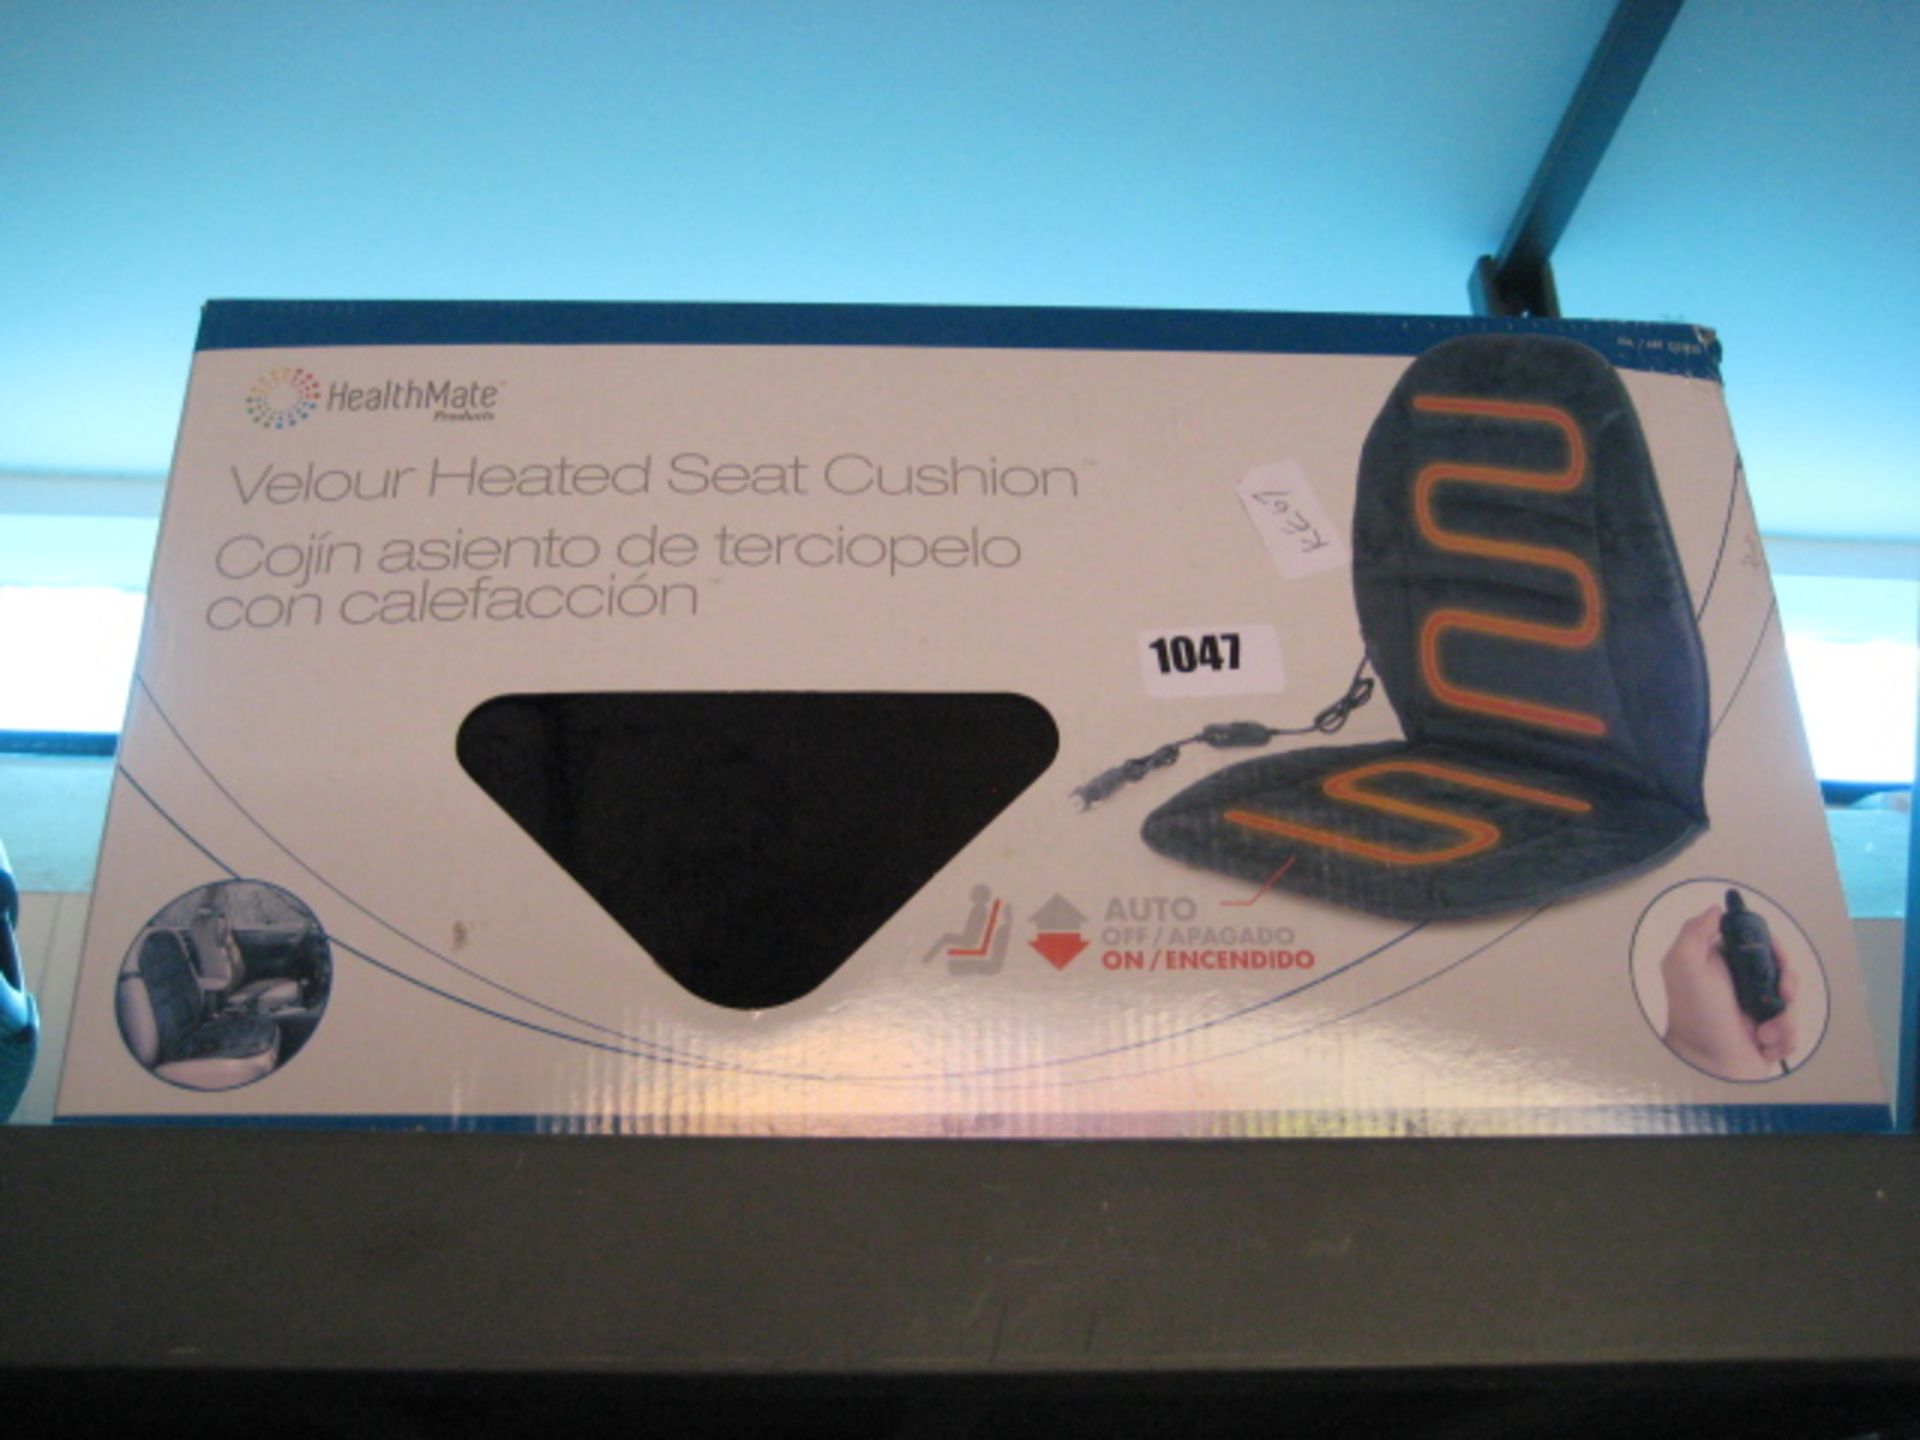 Health Mate Velour heated seat cushion